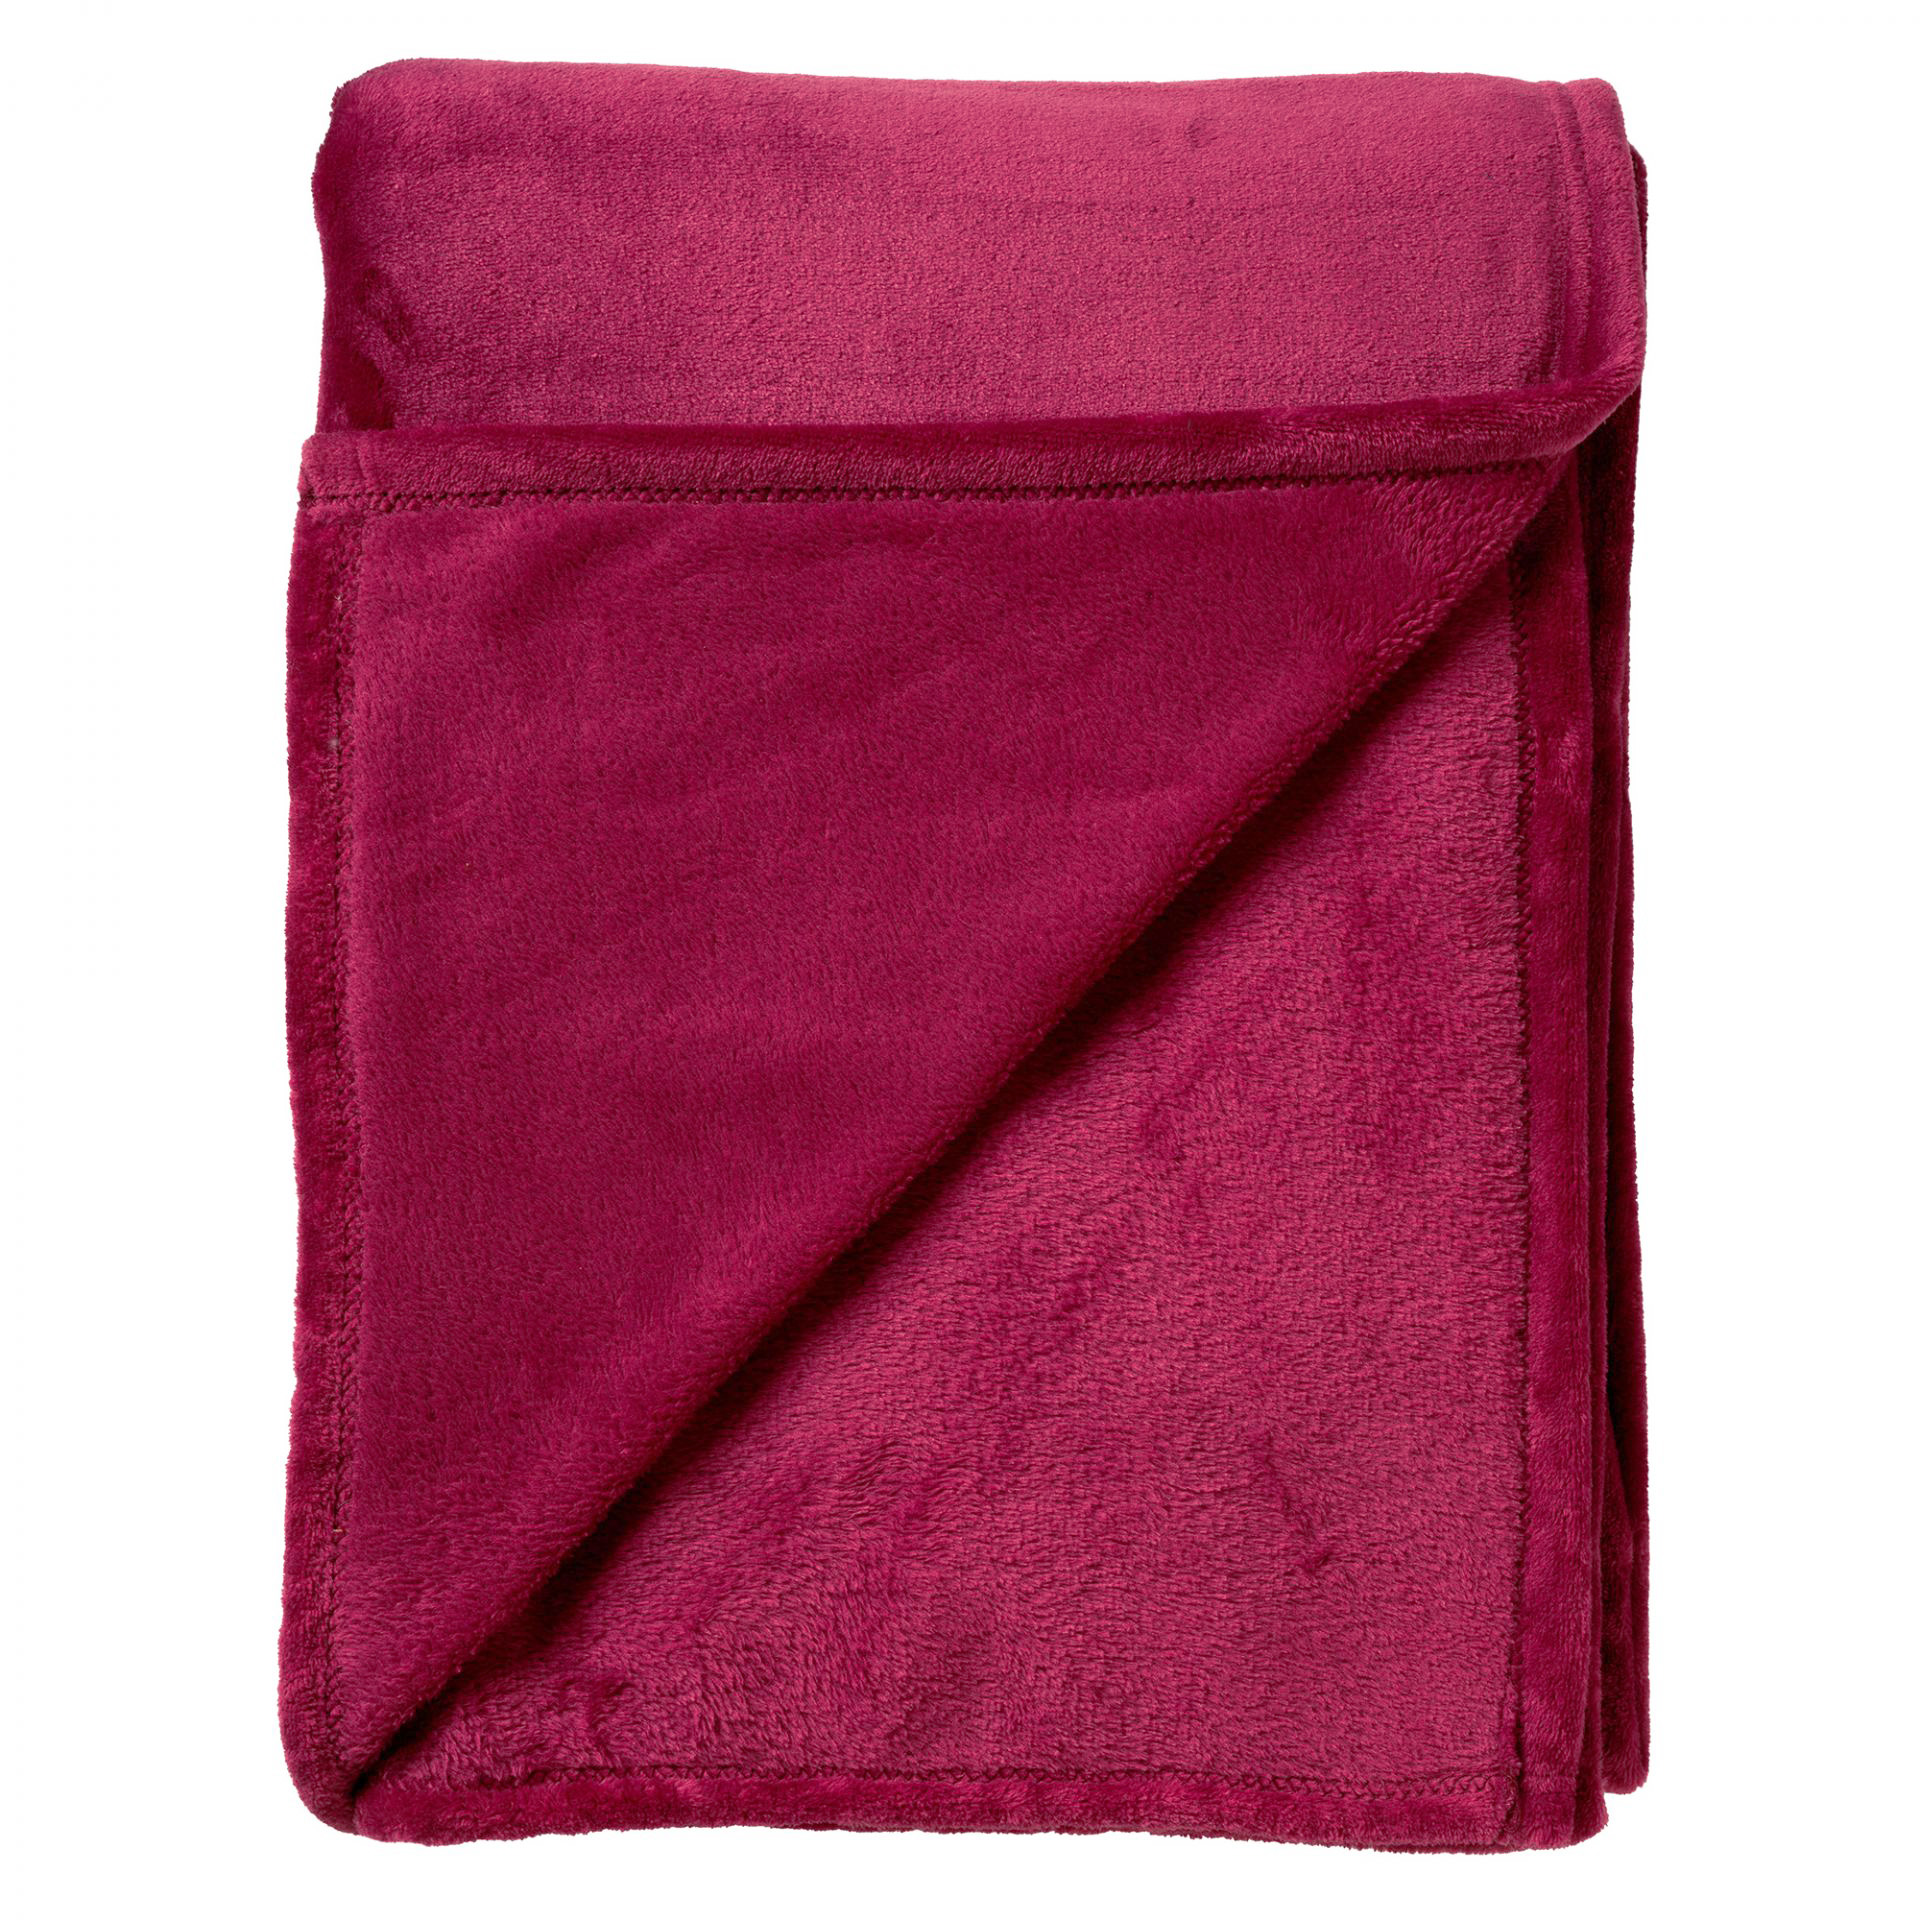 BILLY - Plaid 150x200 cm - flannel fleece - superzacht - Red Plum - donkerroze